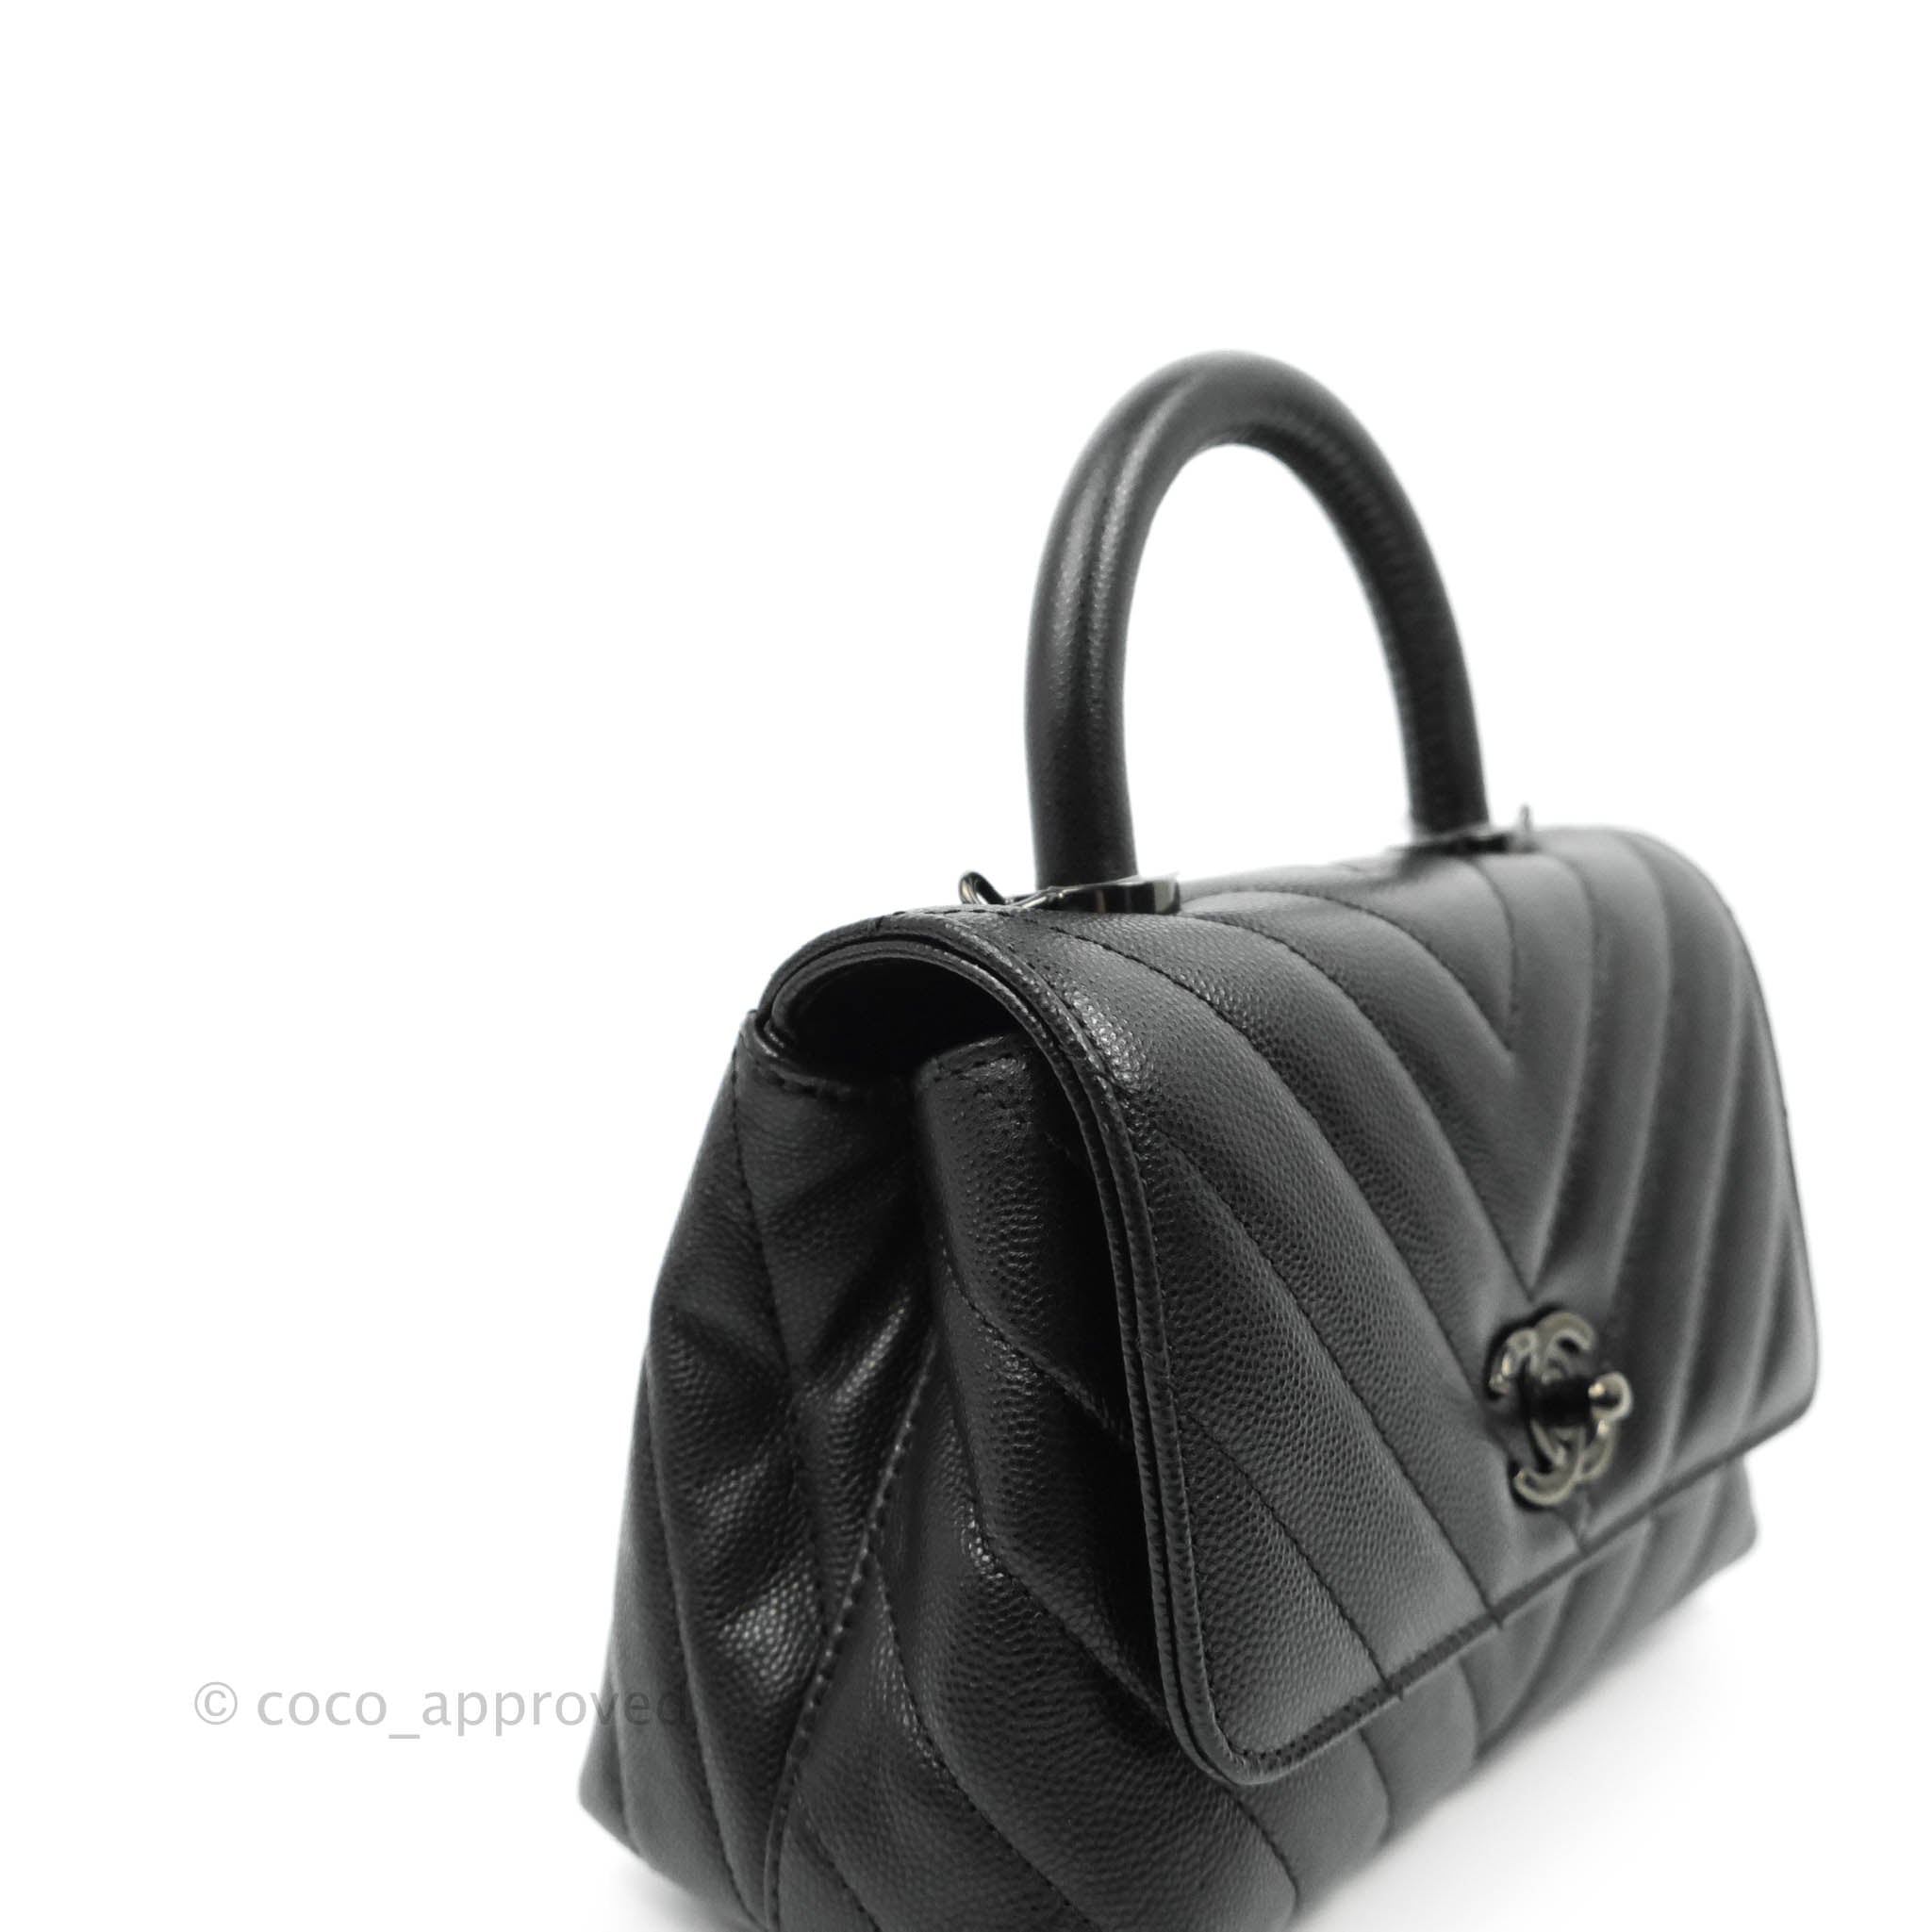 Fashion « Chanel-Vuitton », Sale n°2089, Lot n°143